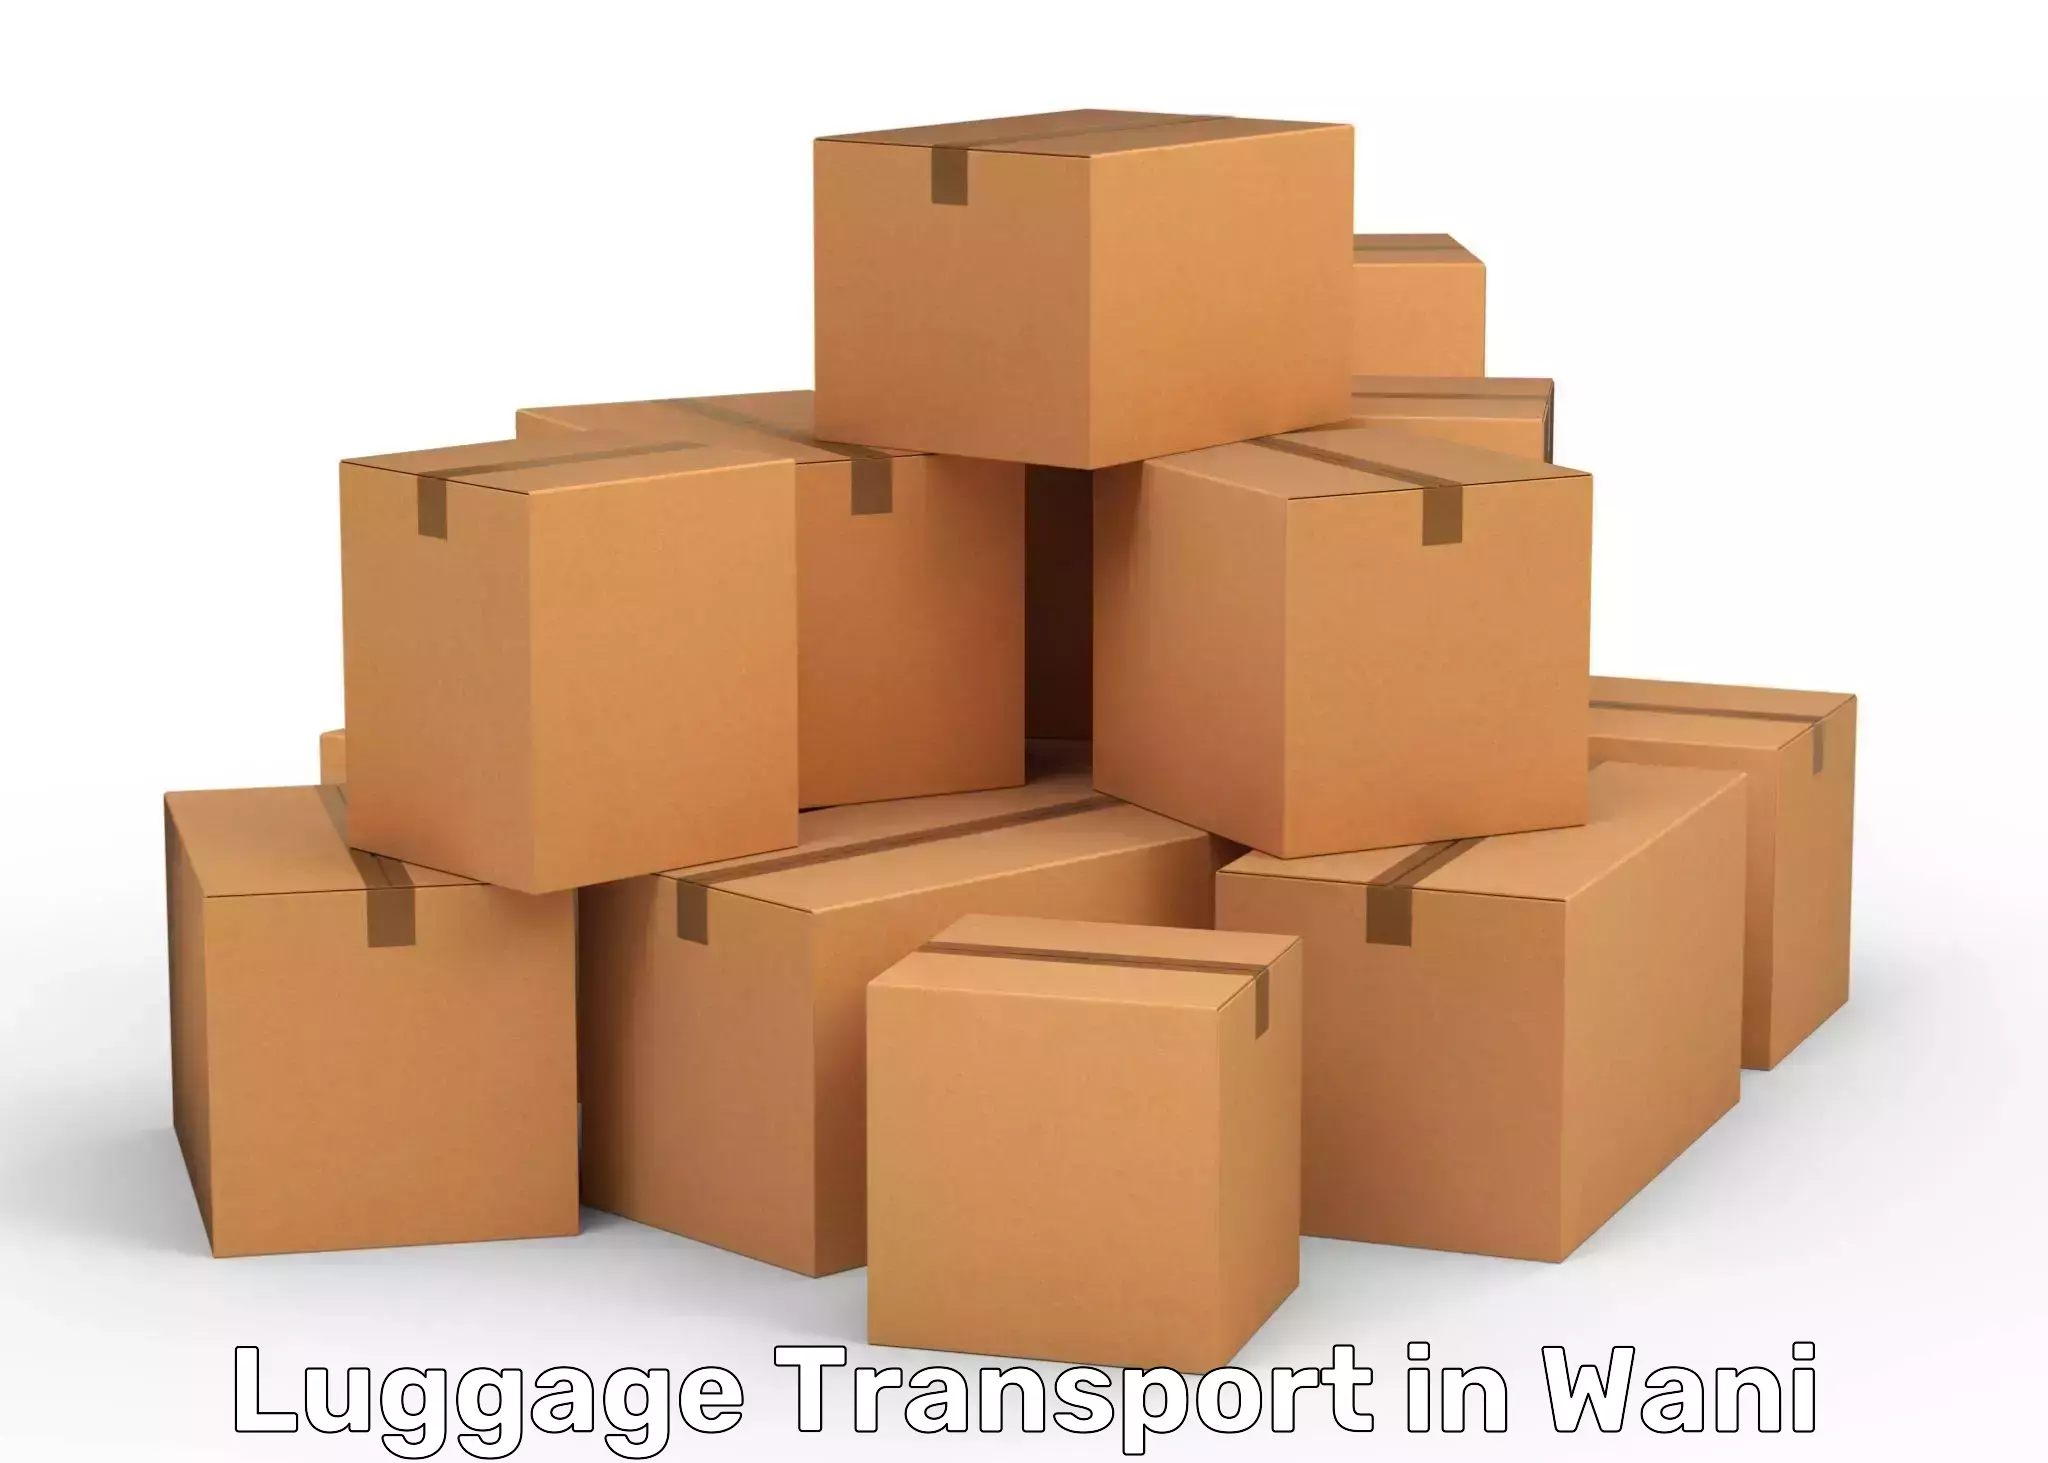 Rural baggage transport in Wani